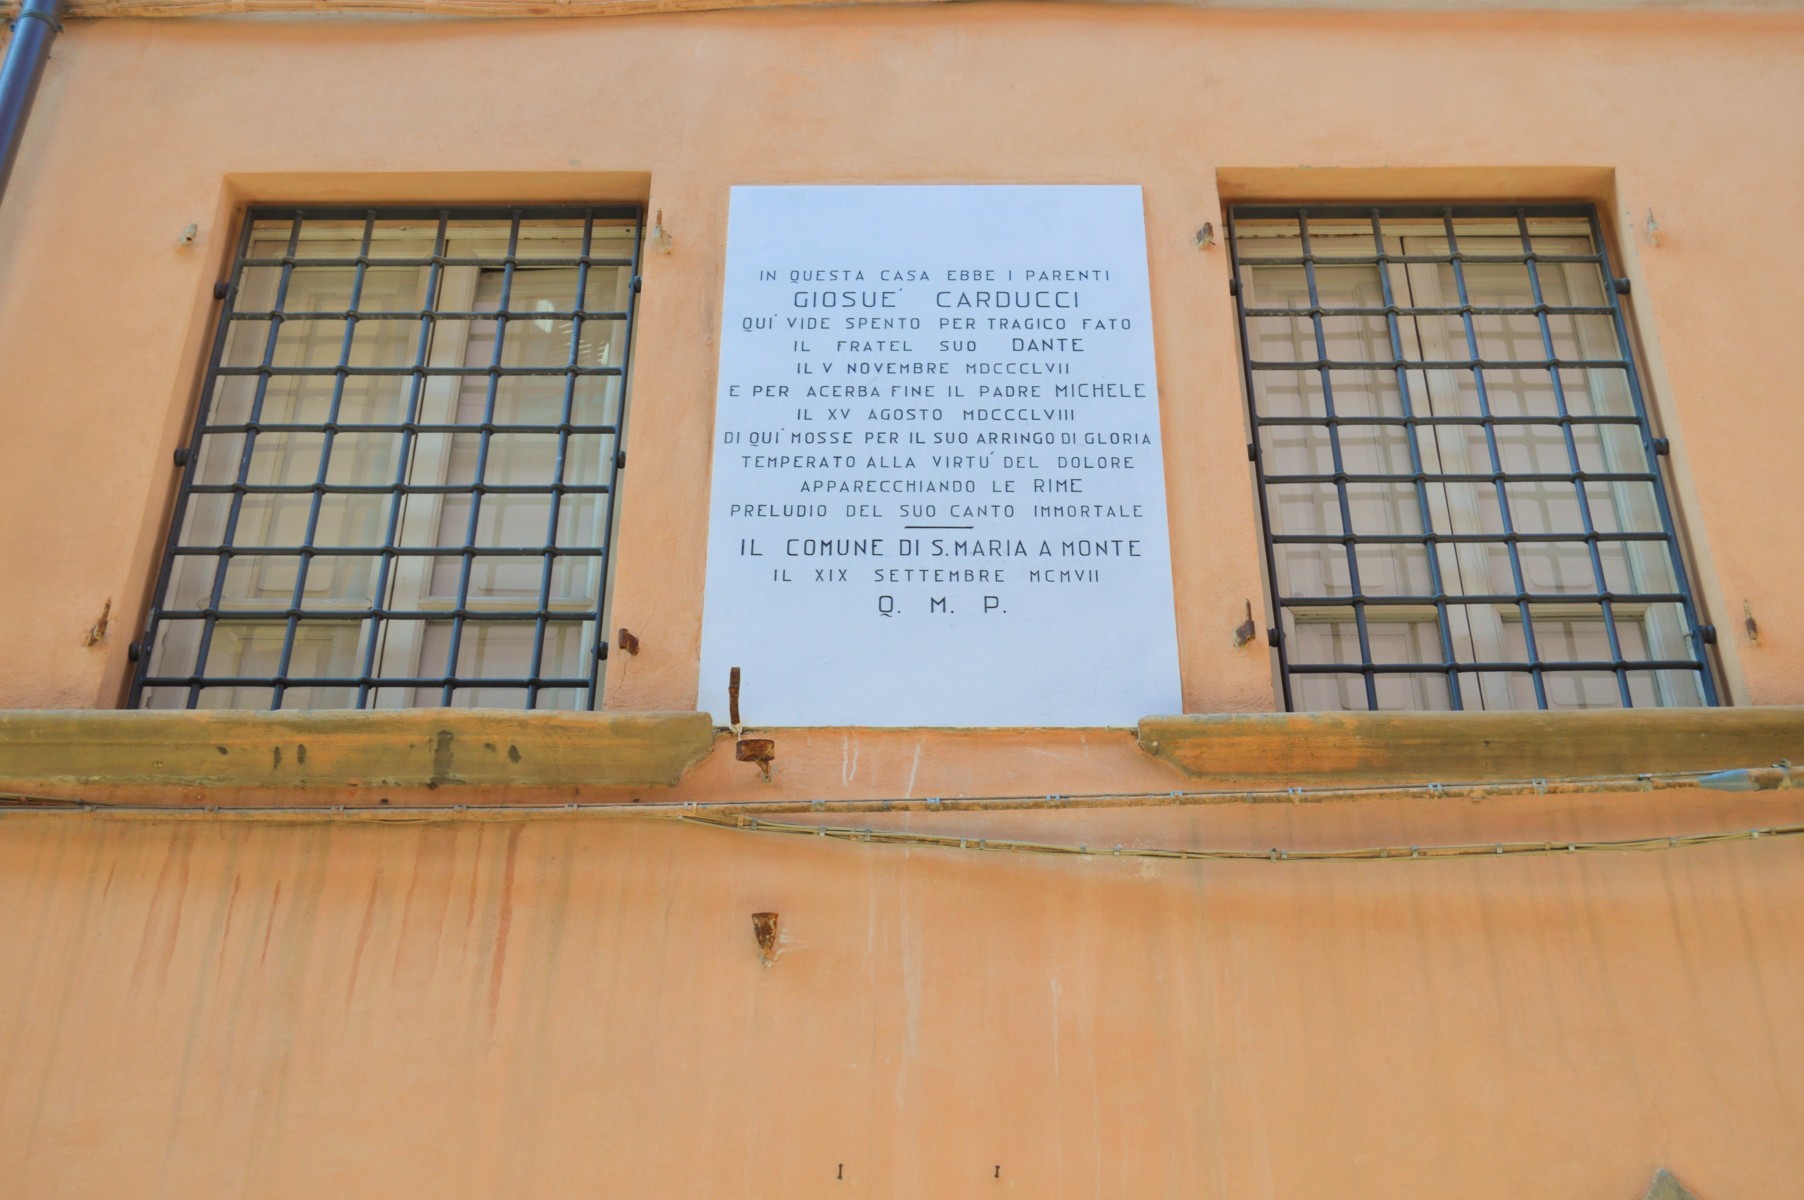 The plaque commemorating the presence of the Carducci family in Santa Maria a Monte